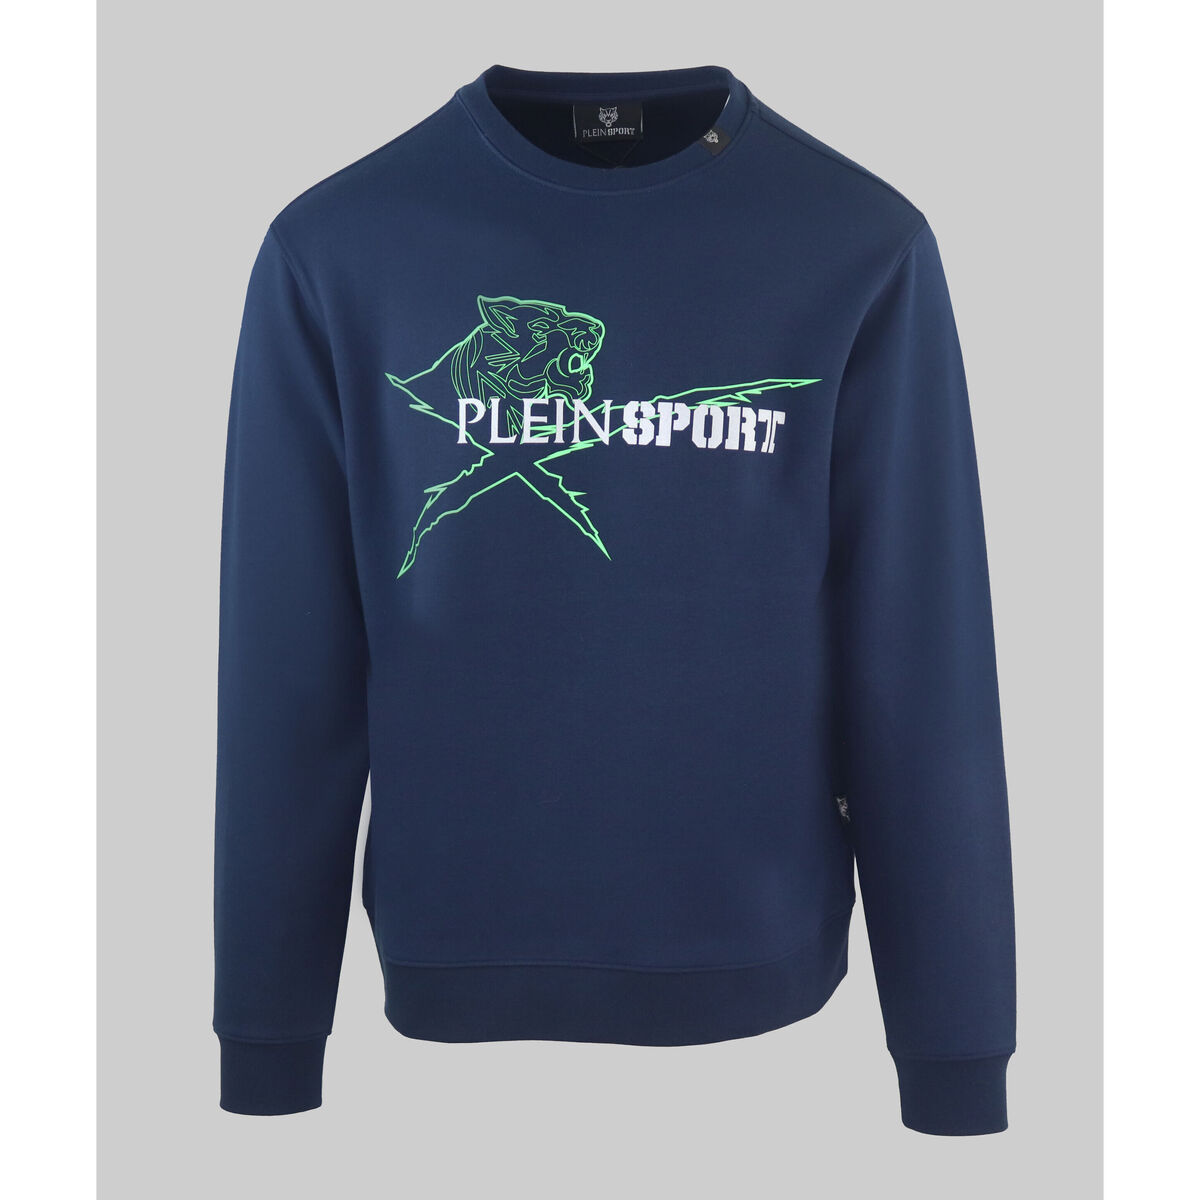 Textiel Heren Sweaters / Sweatshirts Philipp Plein Sport - fipsg13 Blauw